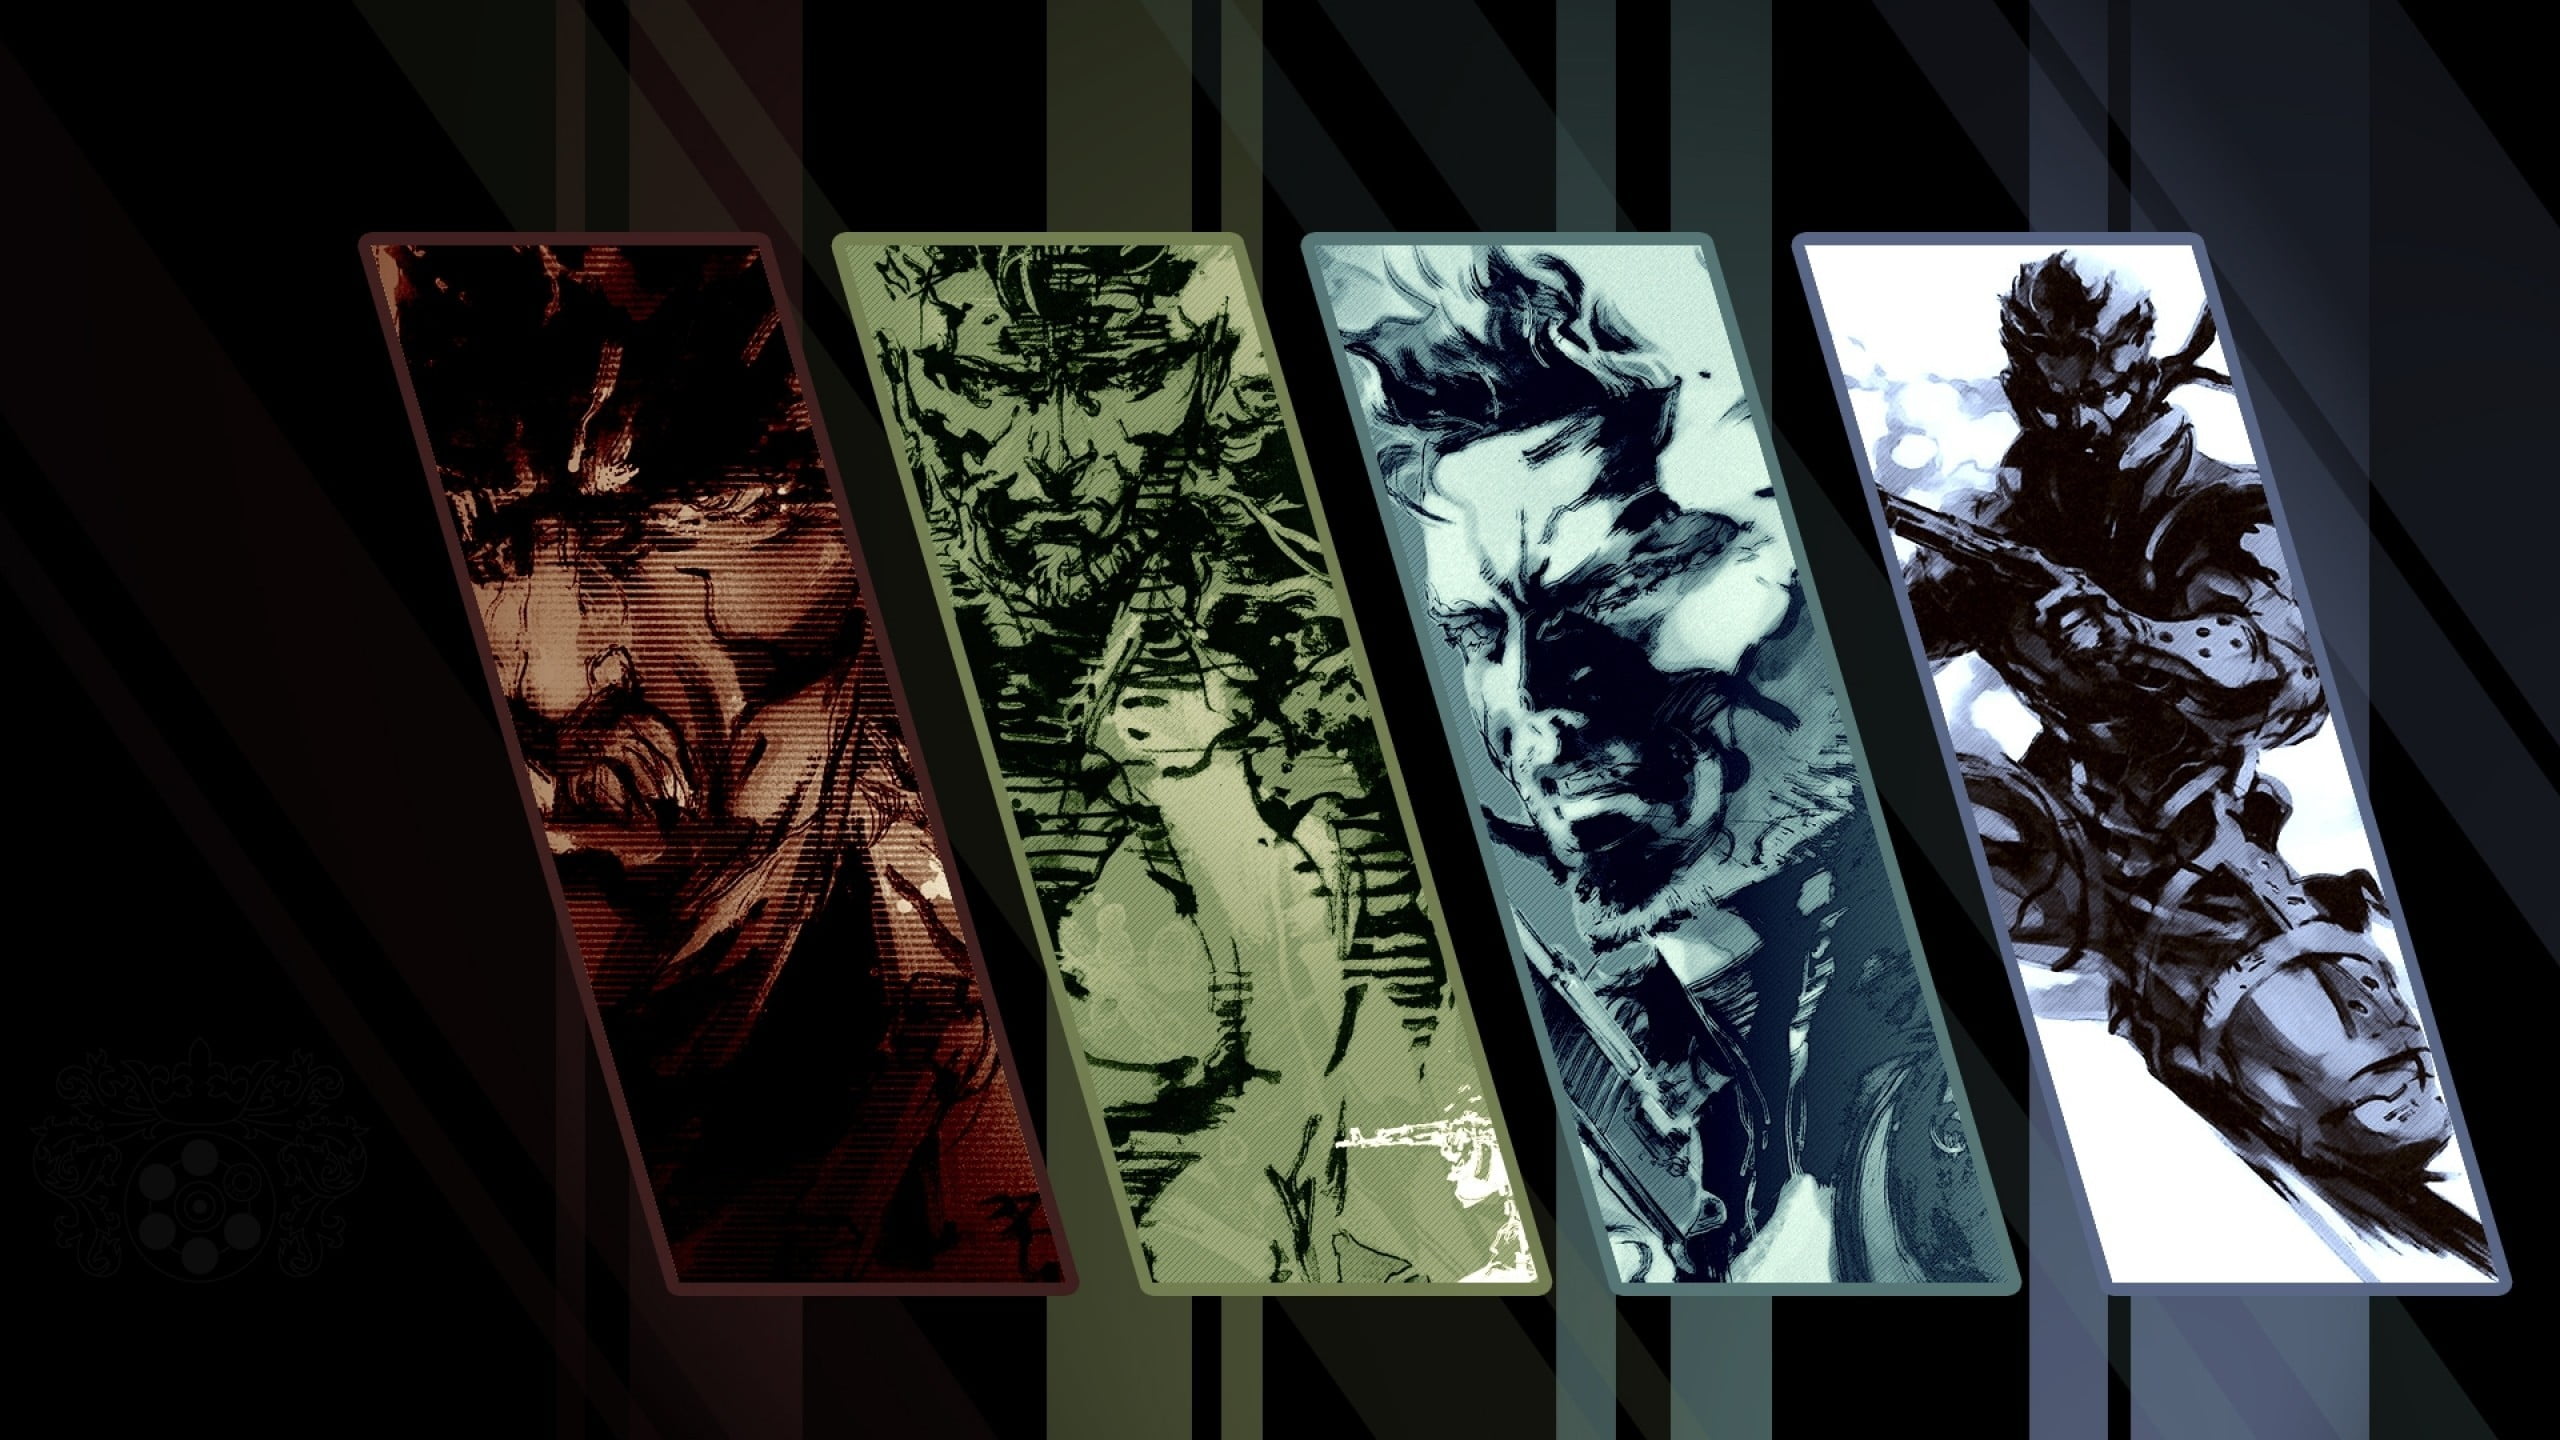 Metal Gear digital wallpaper, Metal Gear Solid 3: Snake Eater